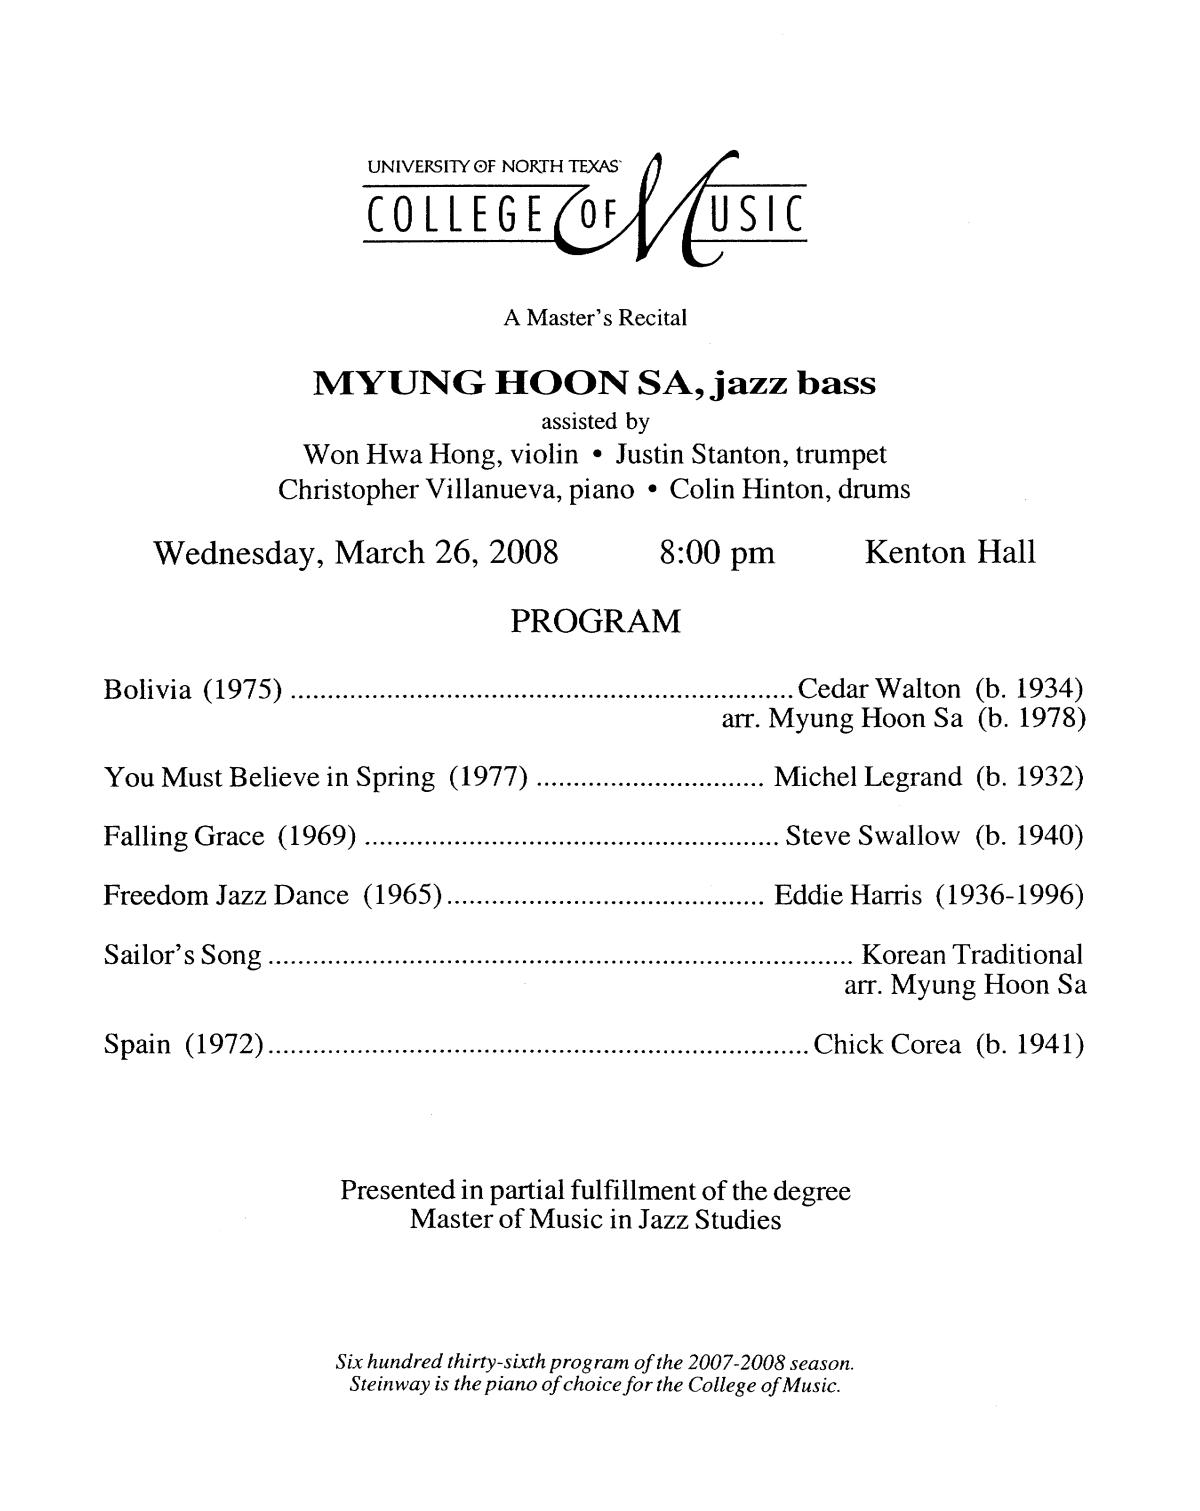 College of Music program book 2007-2008 Student Performances Vol. 2
                                                
                                                    89
                                                